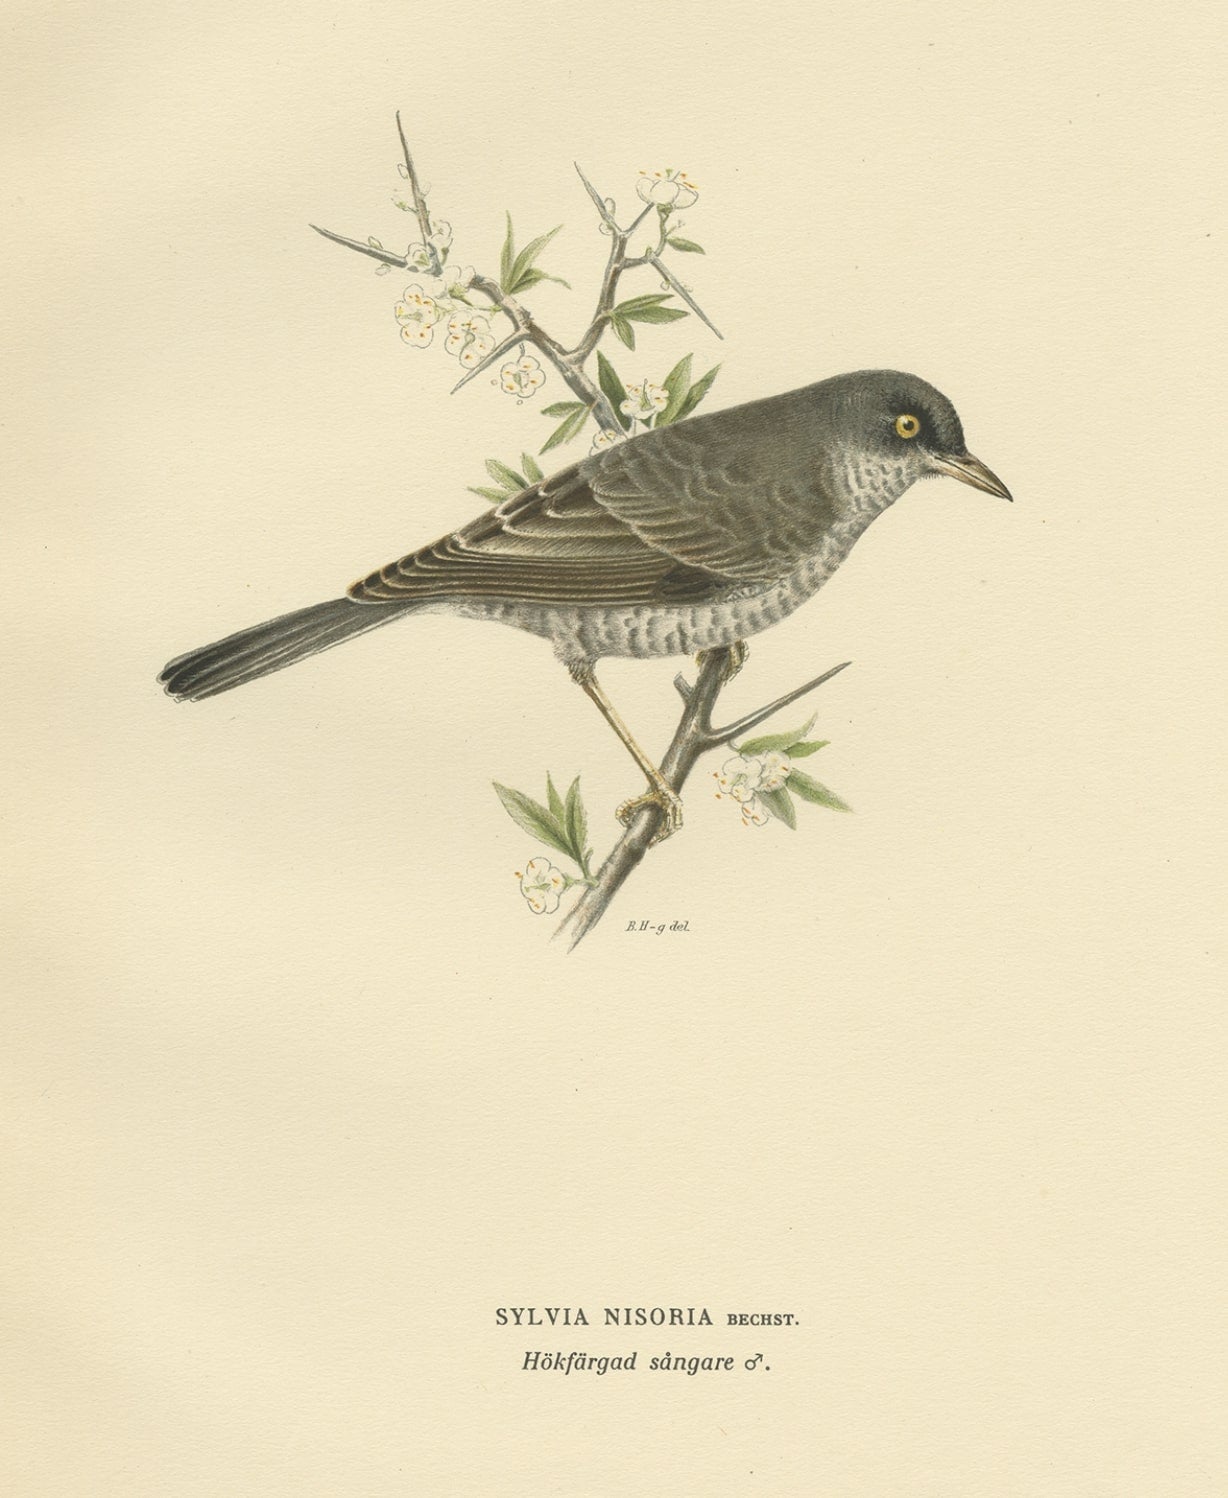 Old Bird Print Named the Barred Warbler, 1927